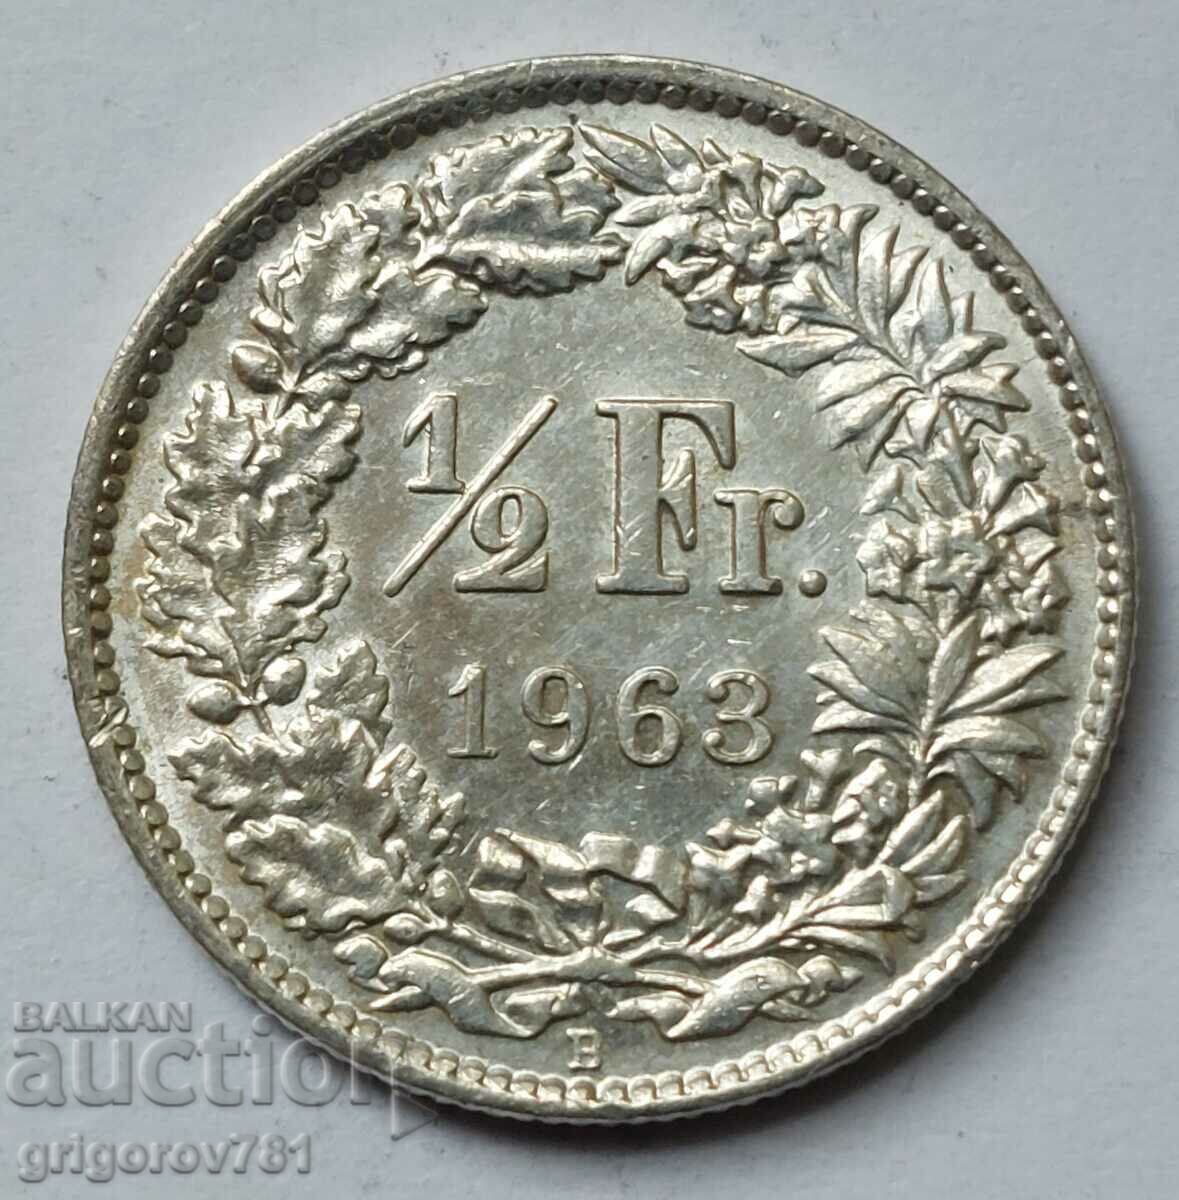 1/2 Franc Argint Elveția 1963 B - Monedă de argint #51